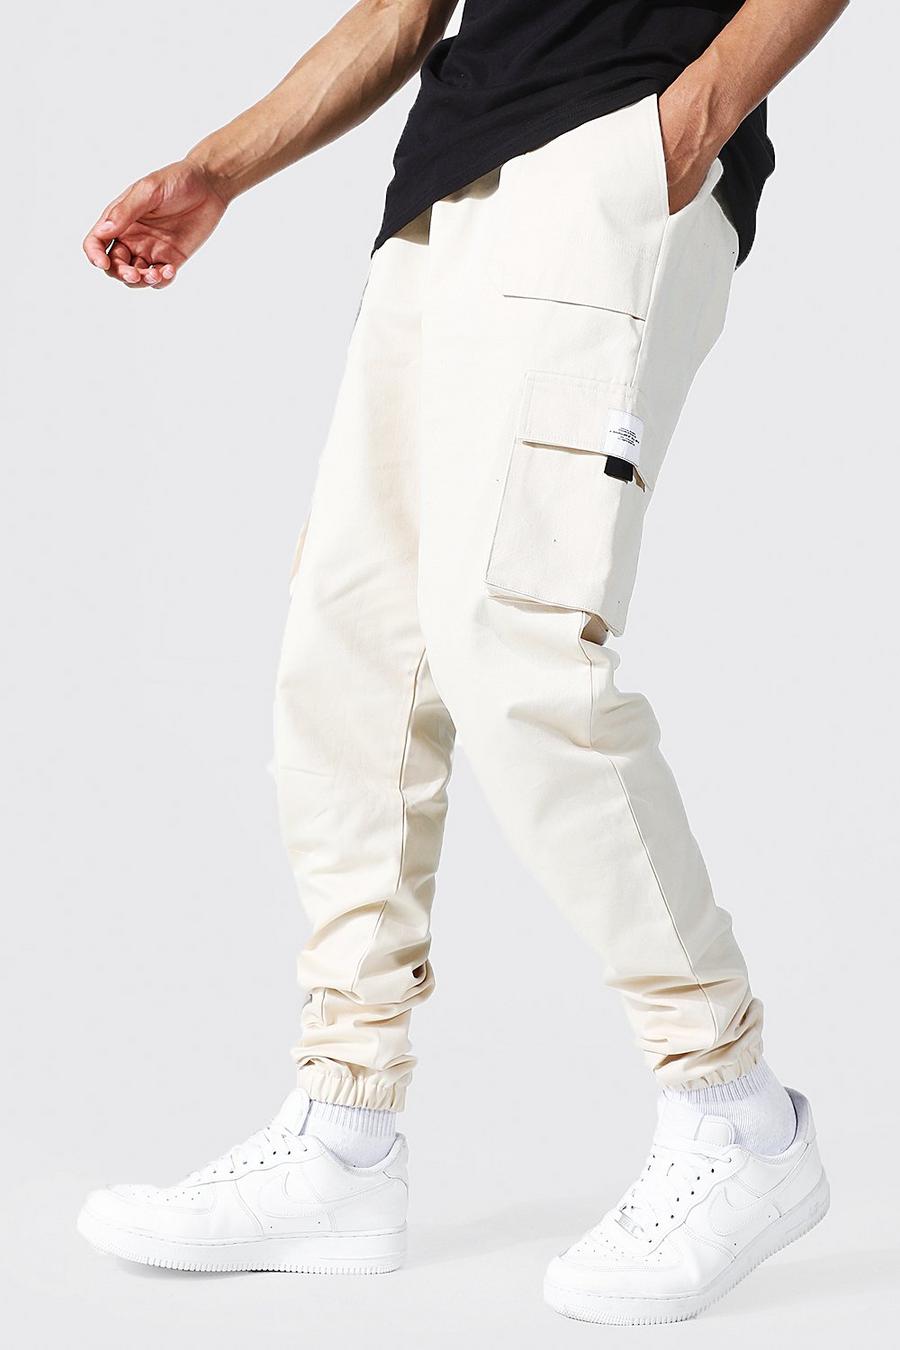 Pantalón deportivo Tall cargo de sarga con cinturón y etiqueta, Ecru bianco